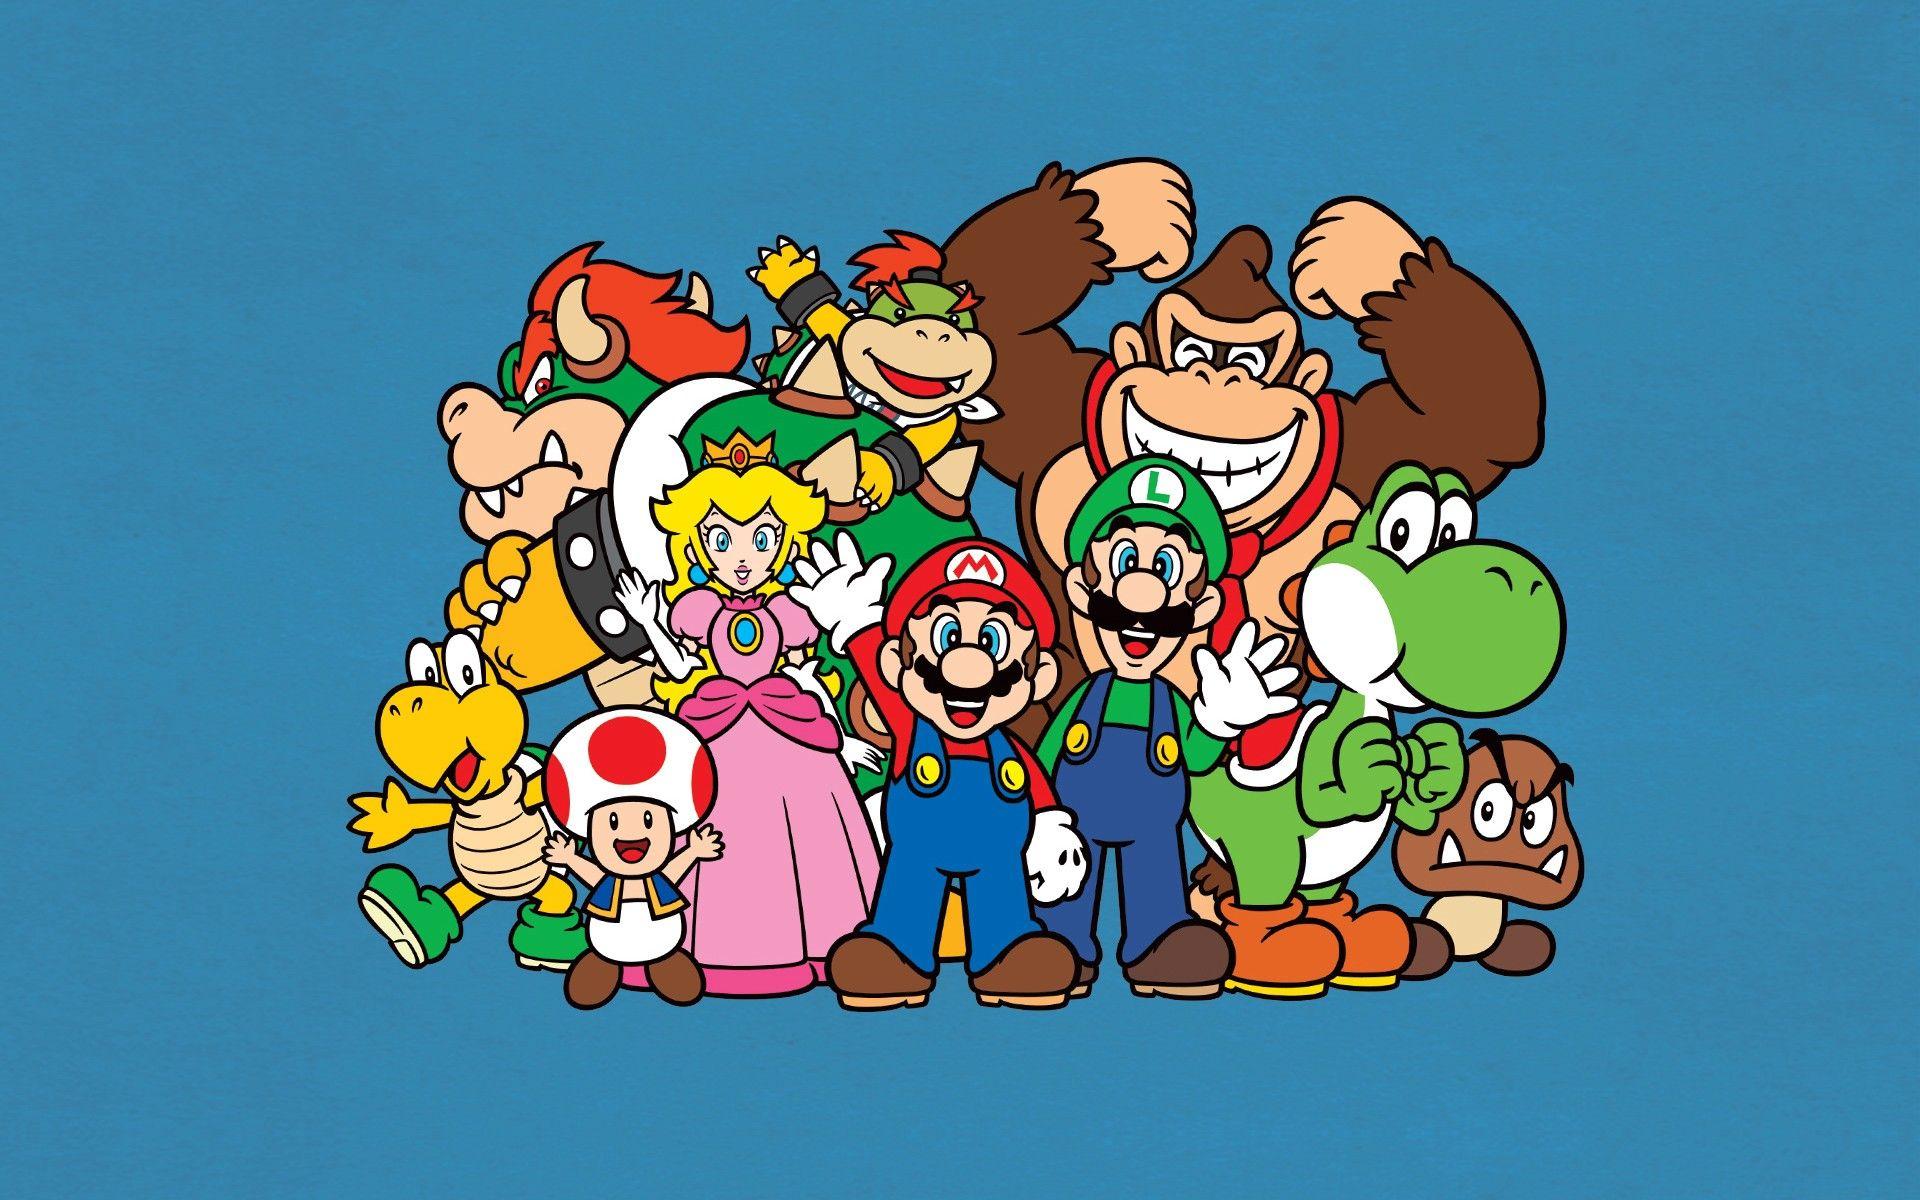 video games, Mario Bros., Toad character, Donkey Kong, Luigi, Yoshi